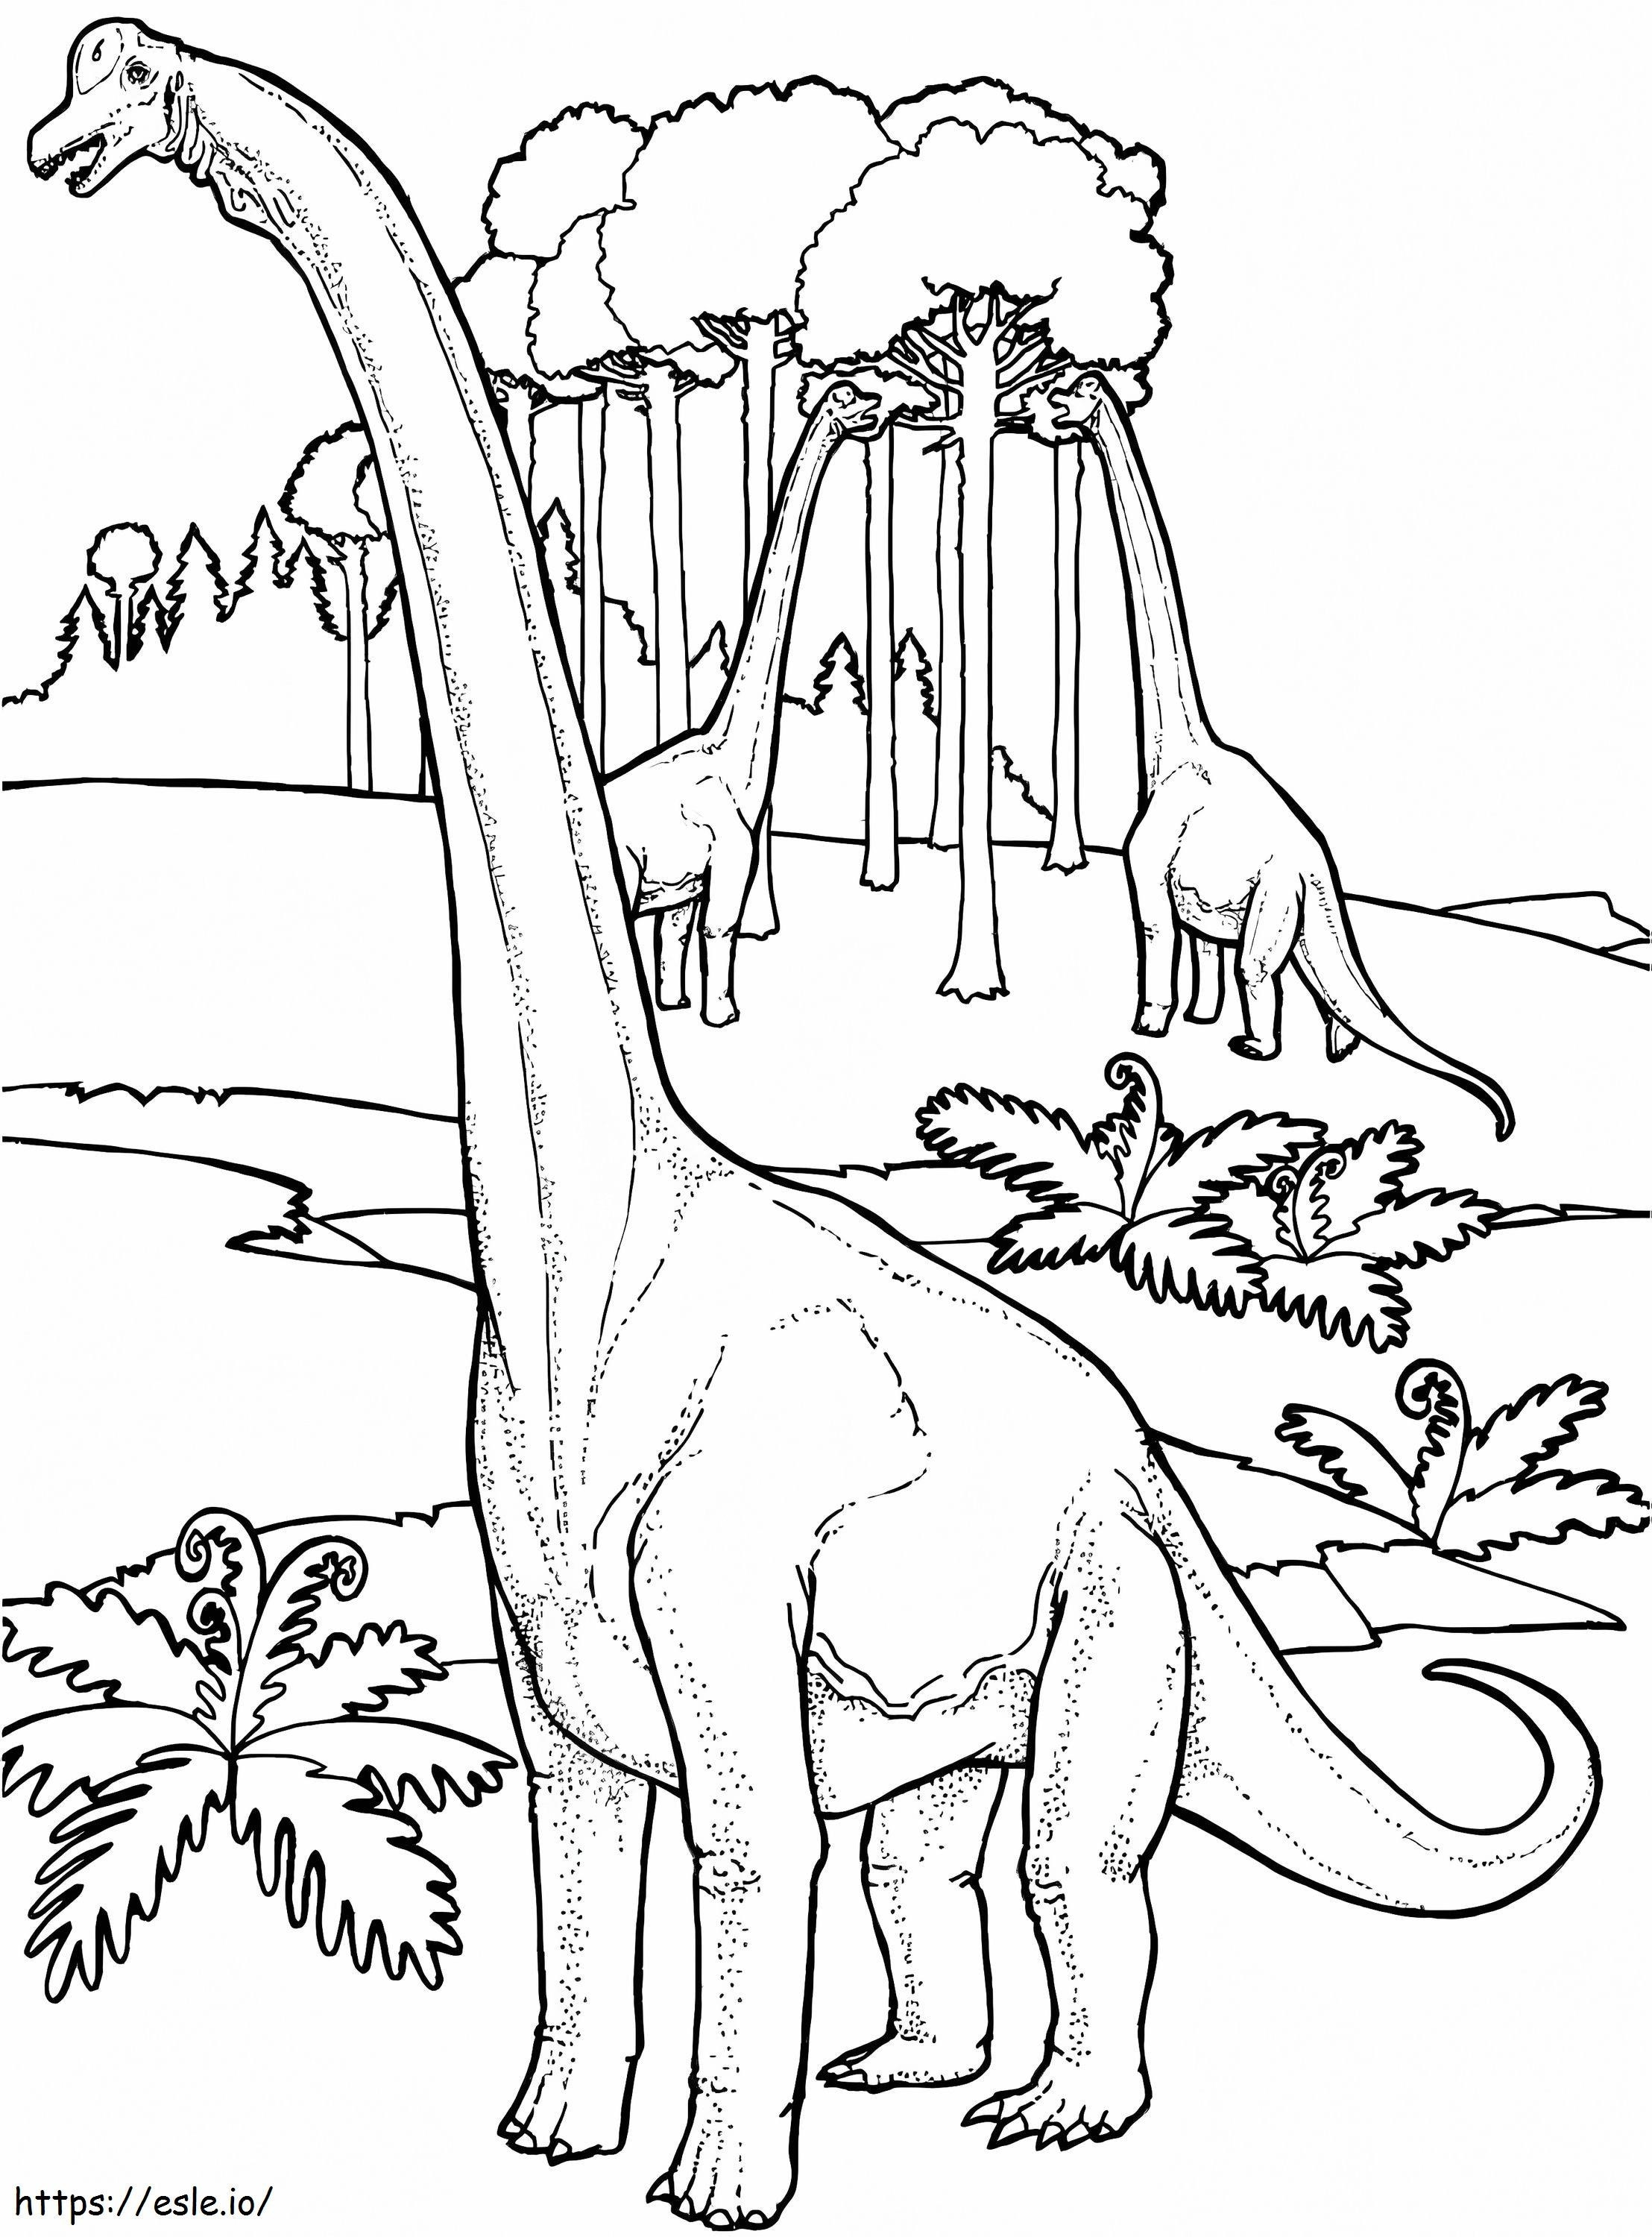 Brachiosaurus 3 kleurplaat kleurplaat